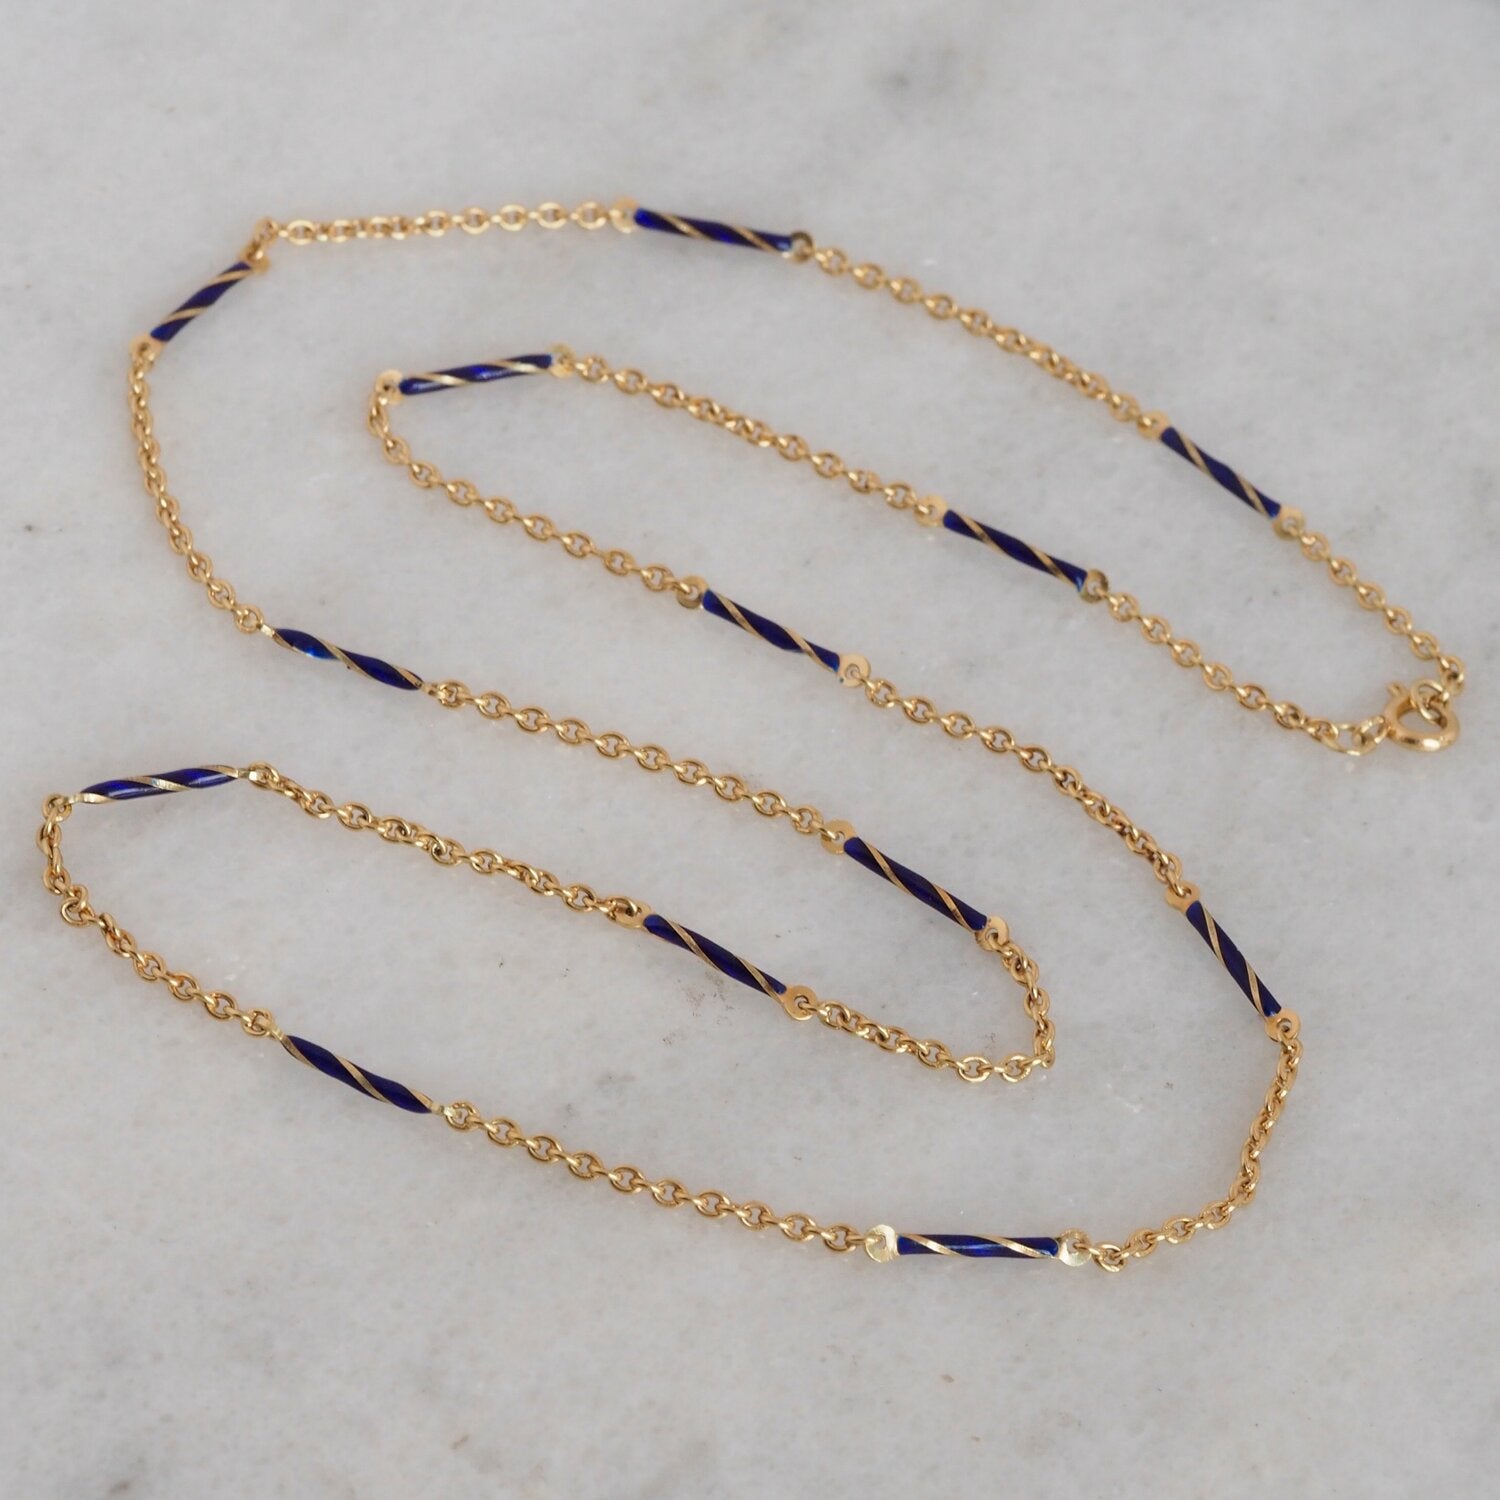 Antique 14k Gold Enamel Station Link Chain Necklace